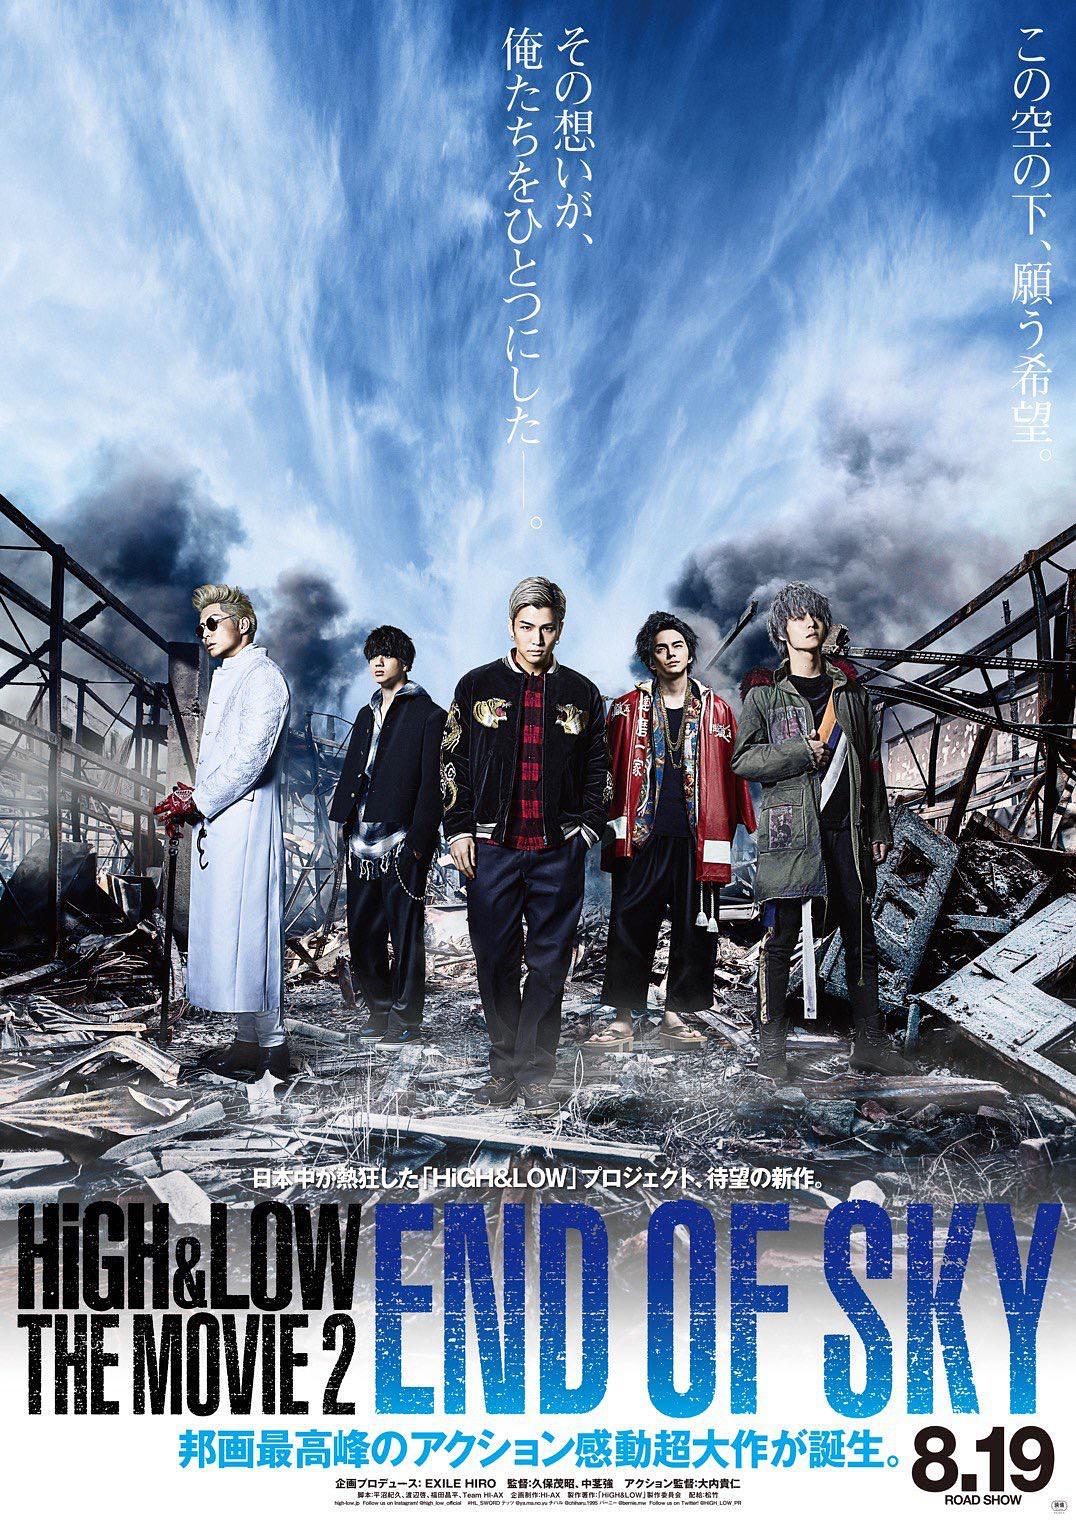 热血街区电影版2:天空绝顶 High.And.Low.The.Movie.2.End.Of.Sky.2017.JAPANESE.1080p.BluRay.x264.DTS-iKiW 10.50GB-1.png